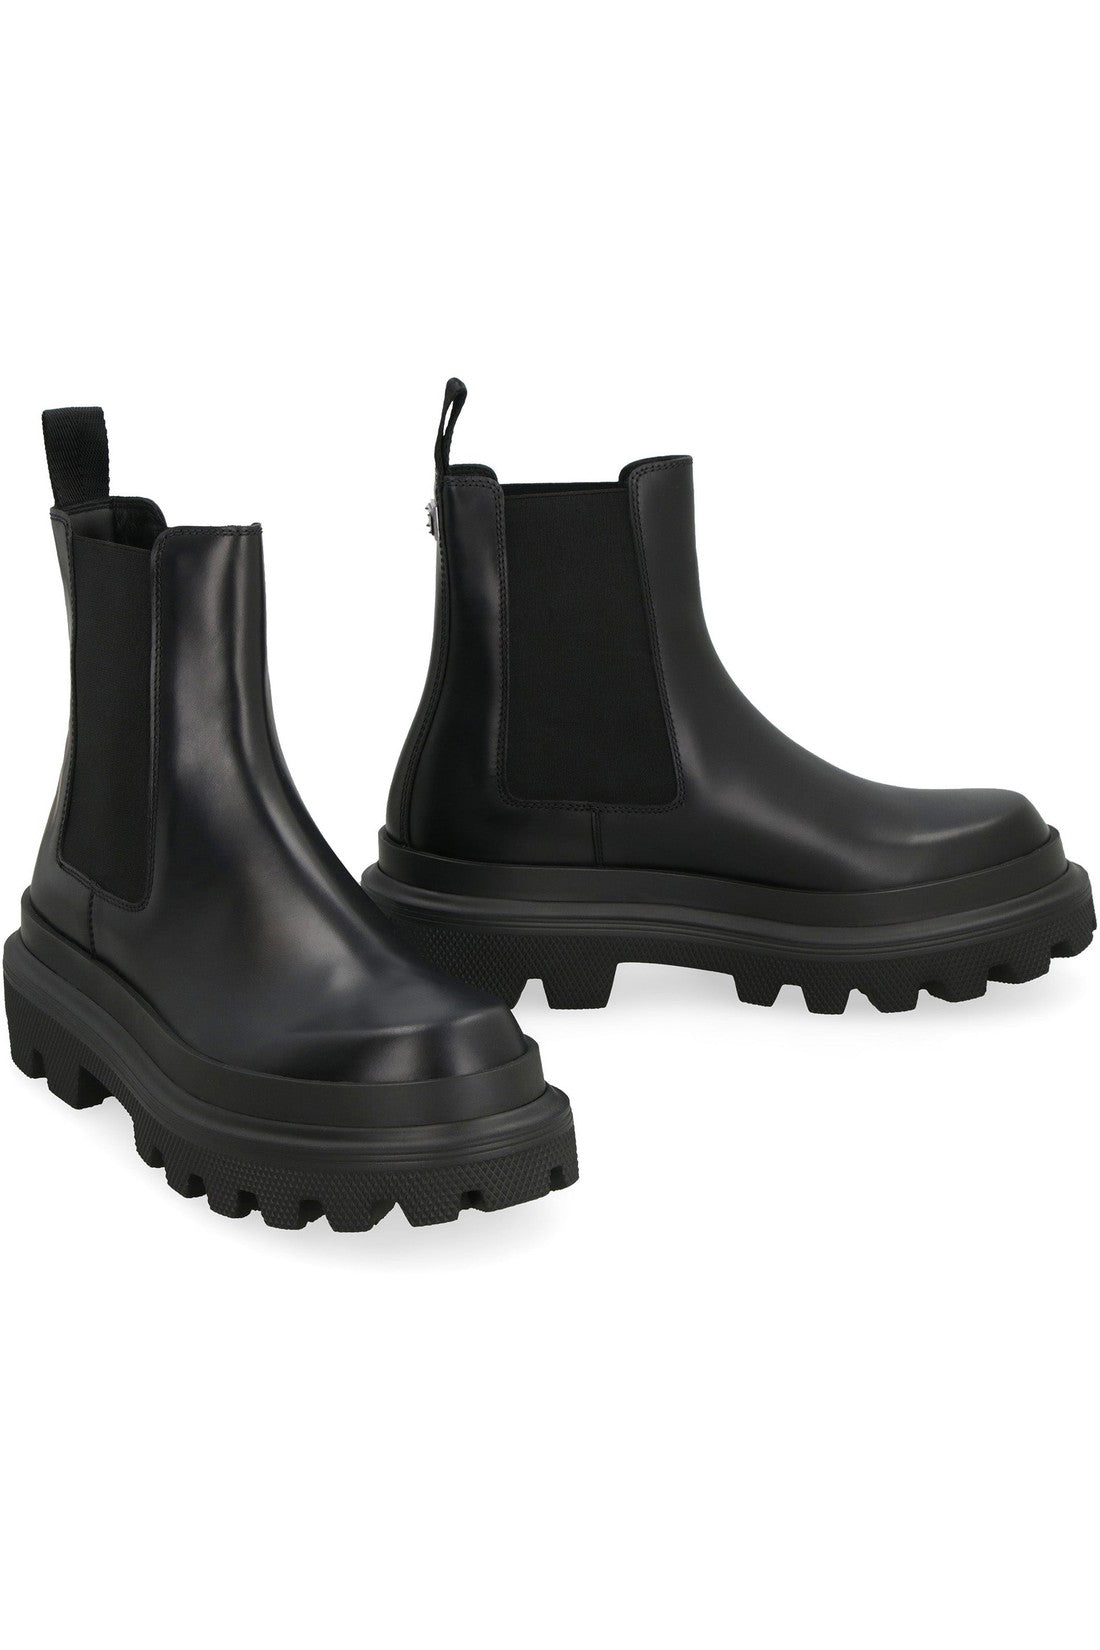 Dolce & Gabbana-OUTLET-SALE-Leather Chelsea boots-ARCHIVIST